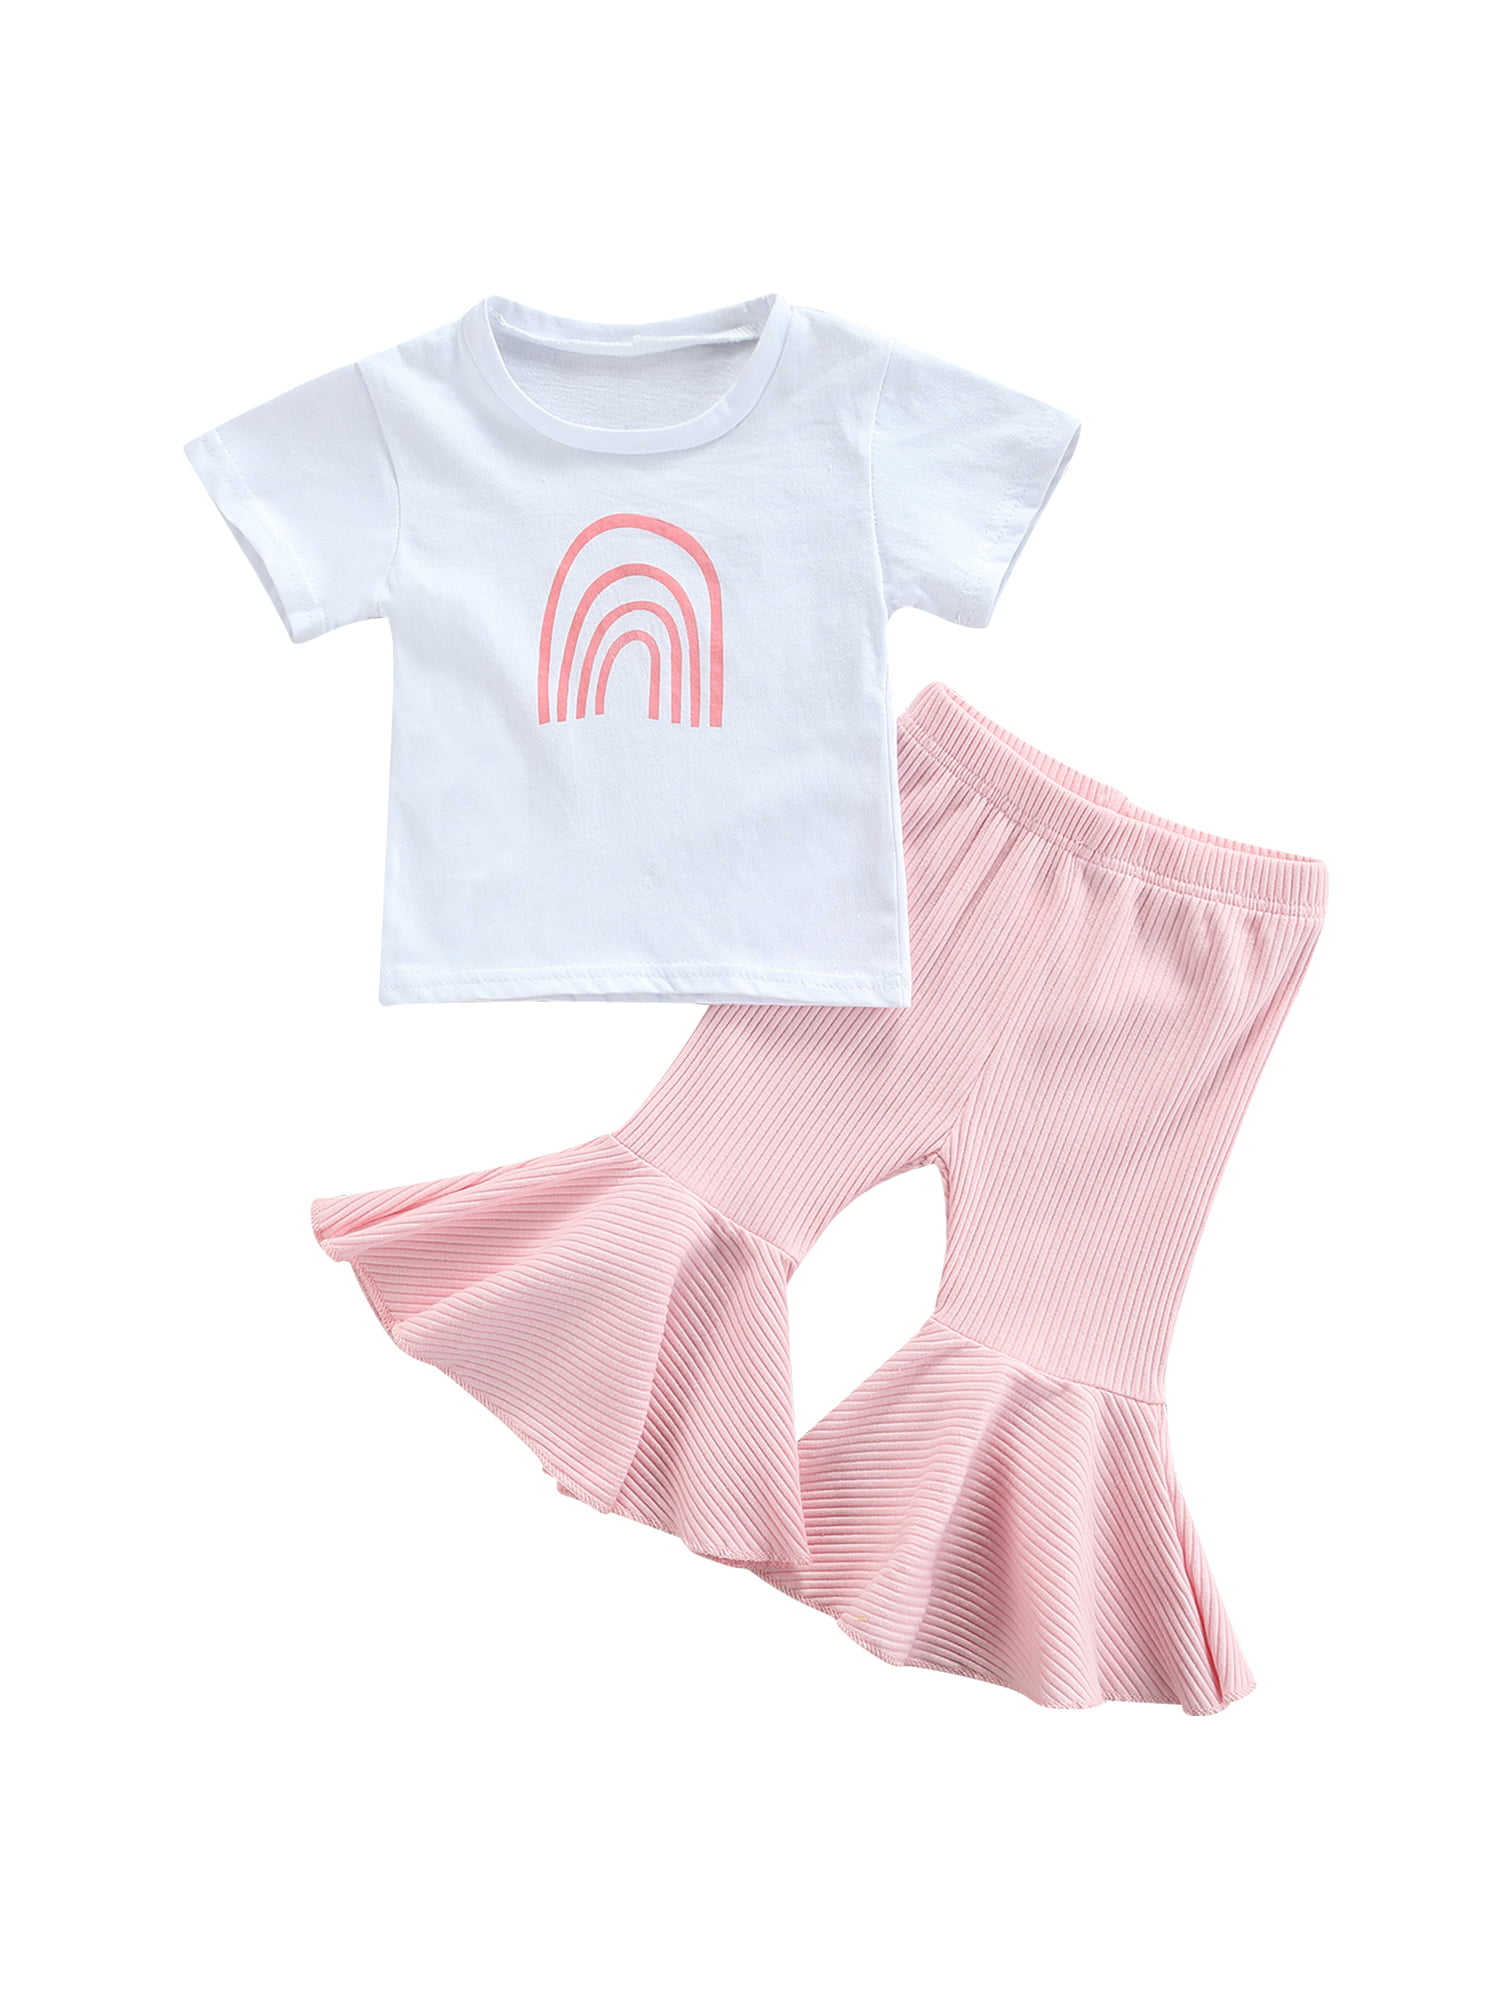 squarex Baby Girls Boys Letter Print Romper Jumpsuit Rainbow Pants Outfits Set